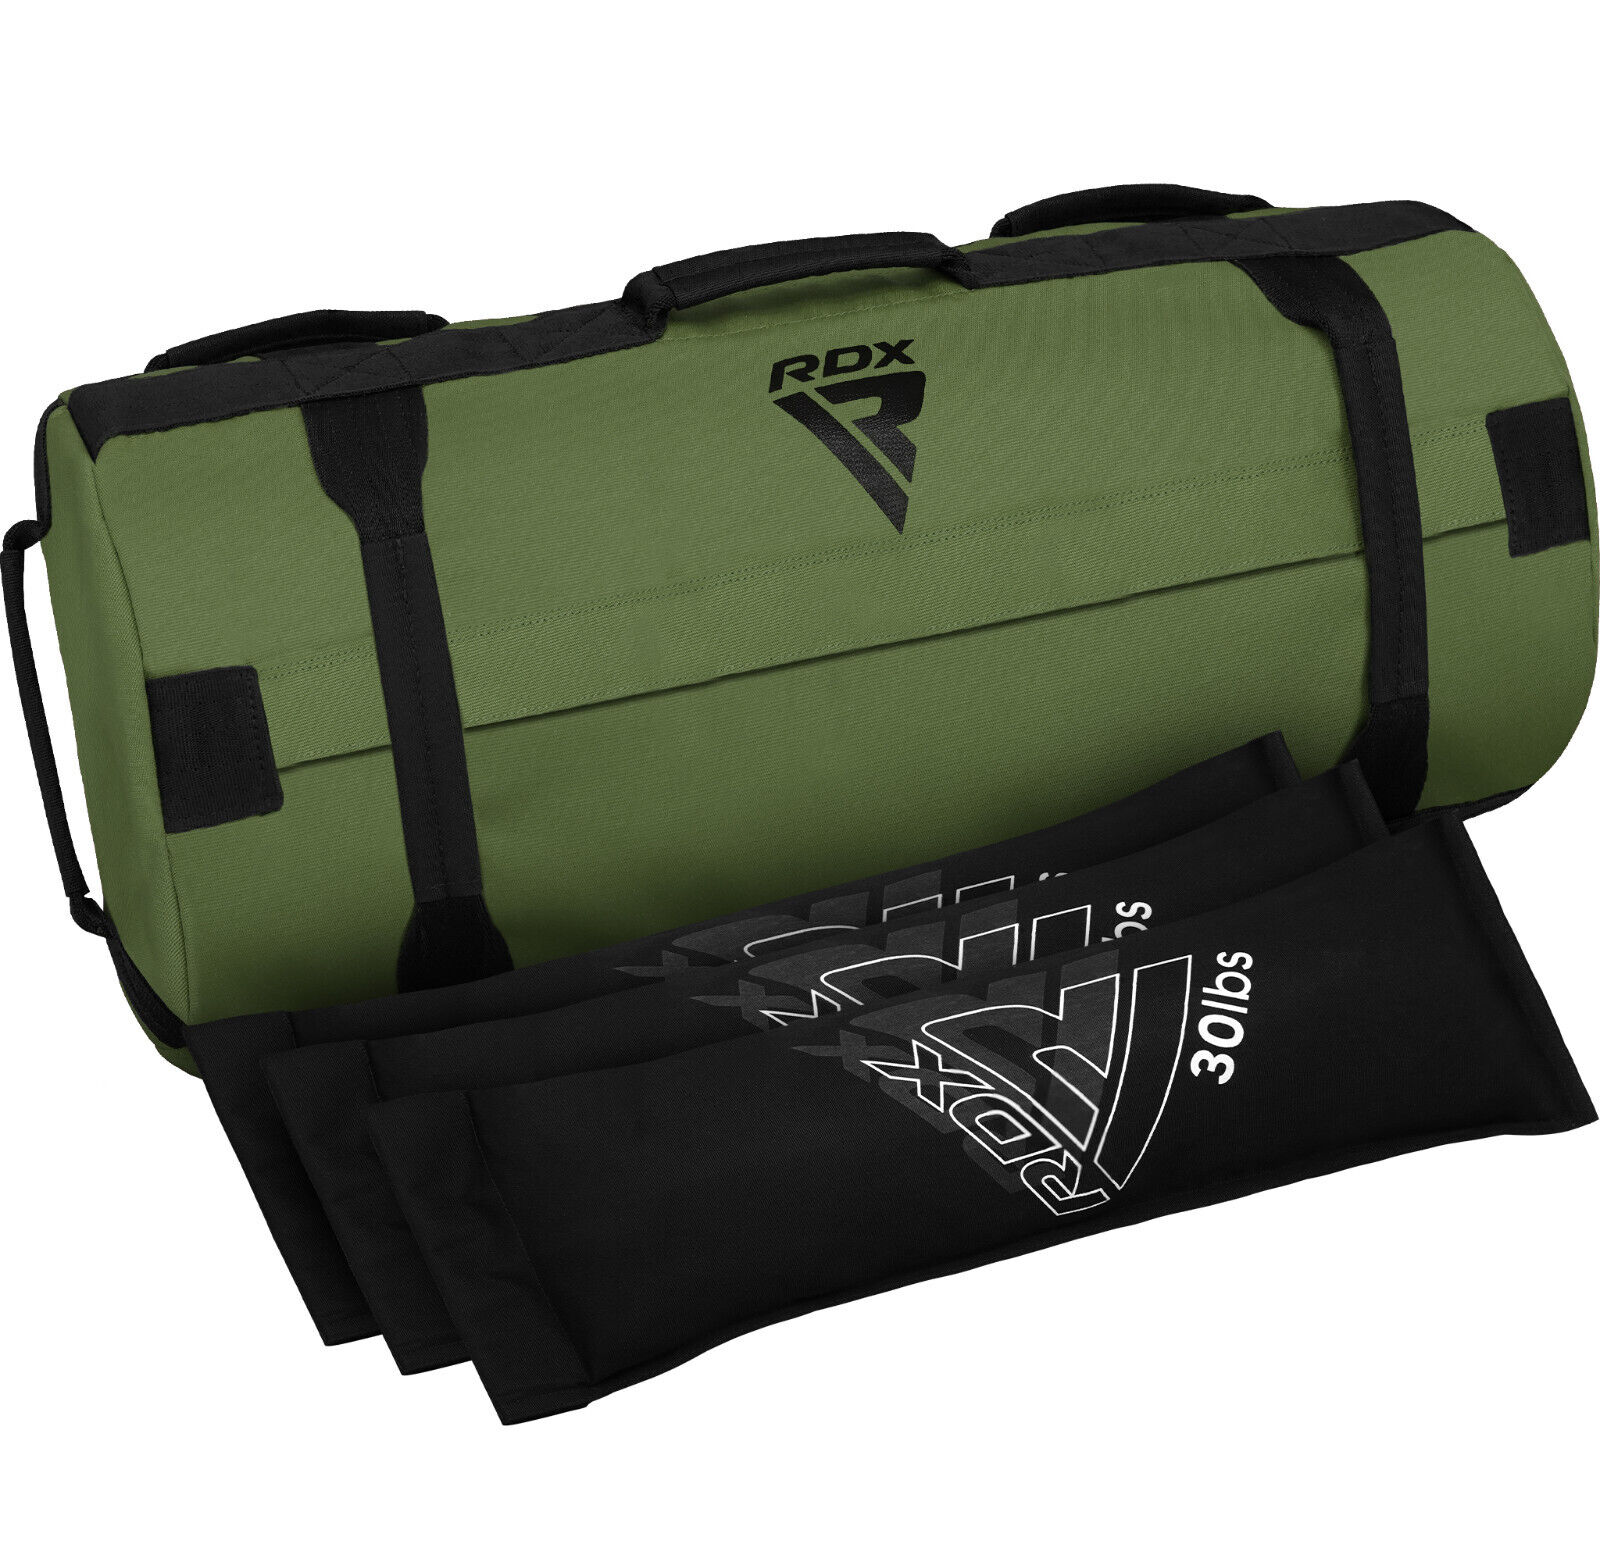 RDX Sandbag Weight Training Power Bag with Handles & Zipper Weight Adjustable